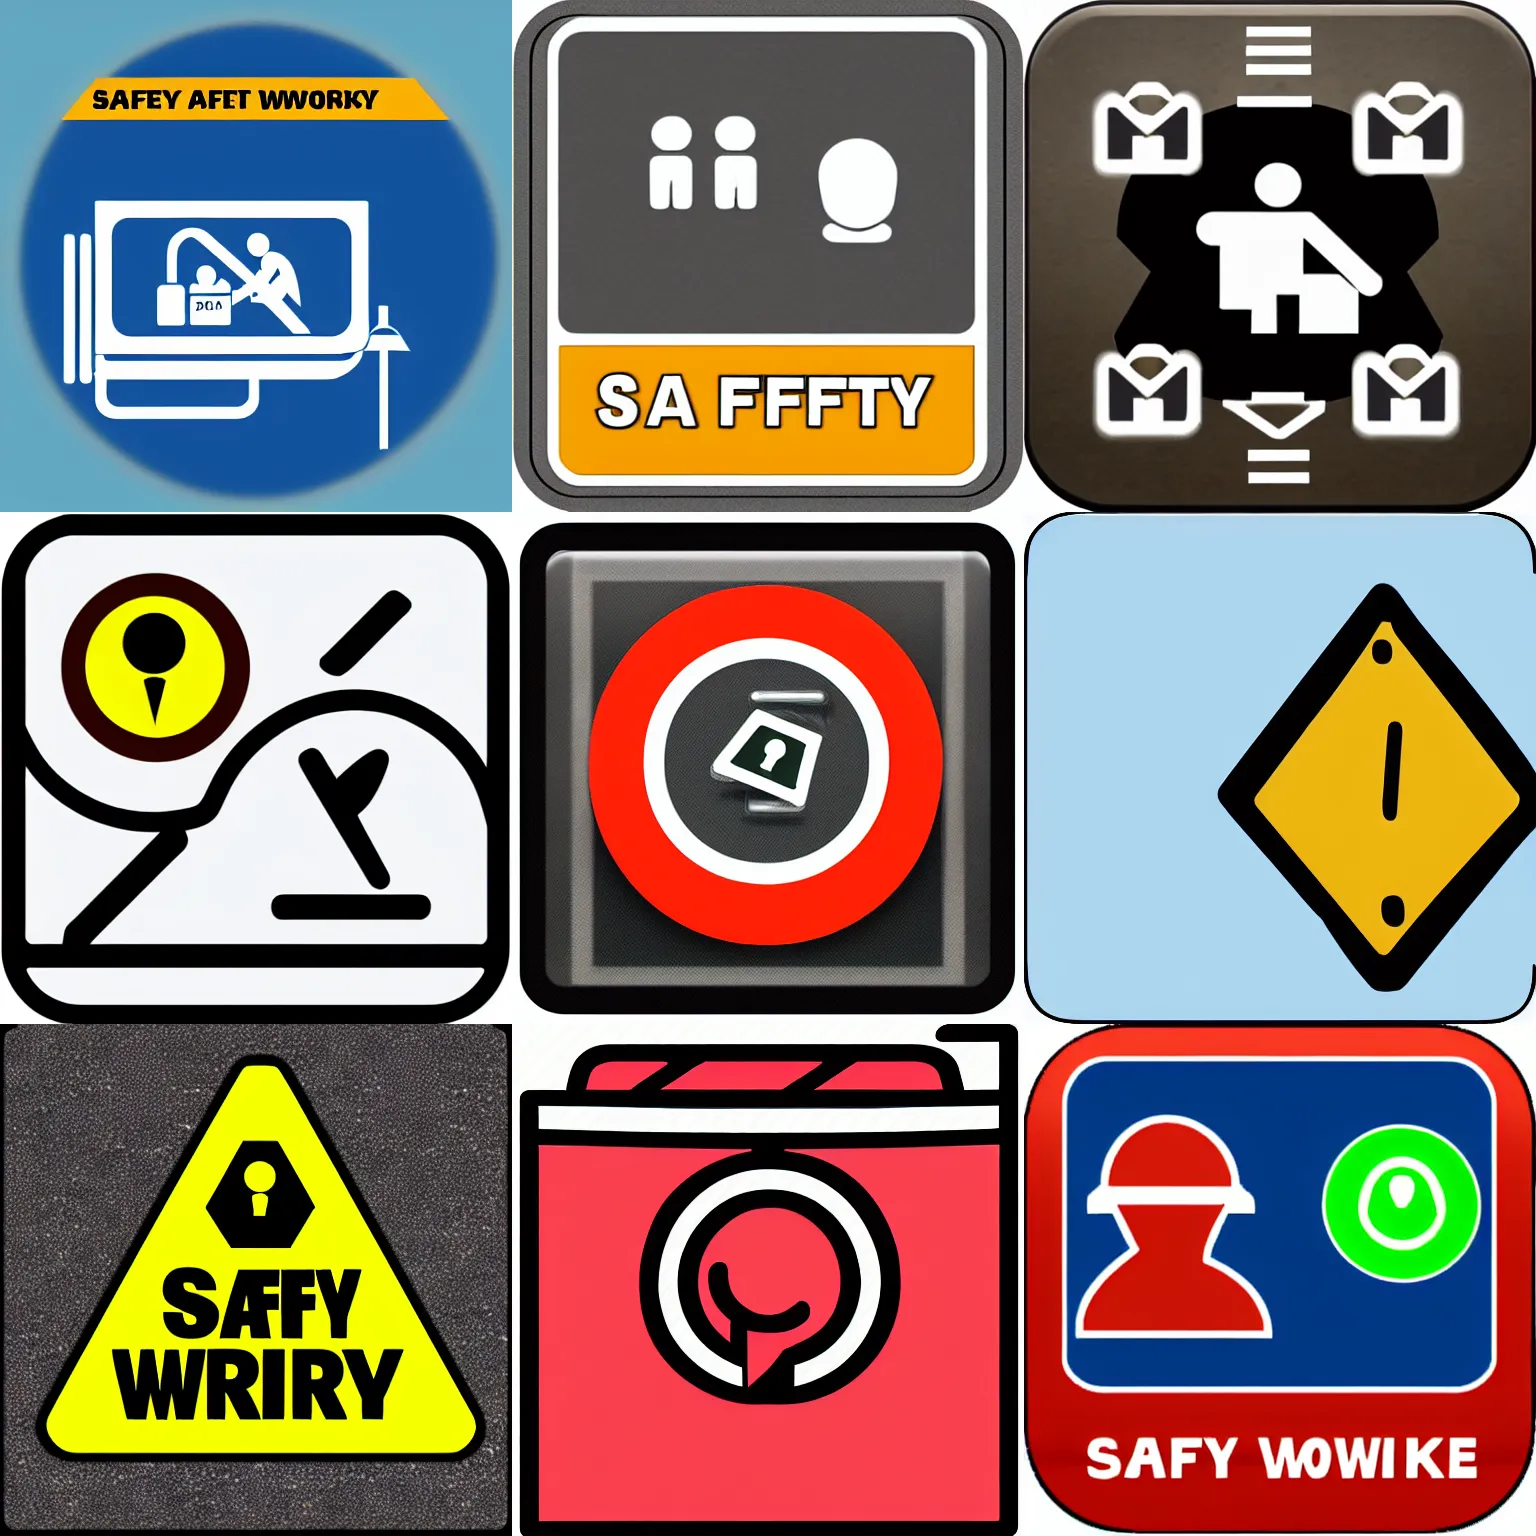 Prompt: Safety at work desktop icon